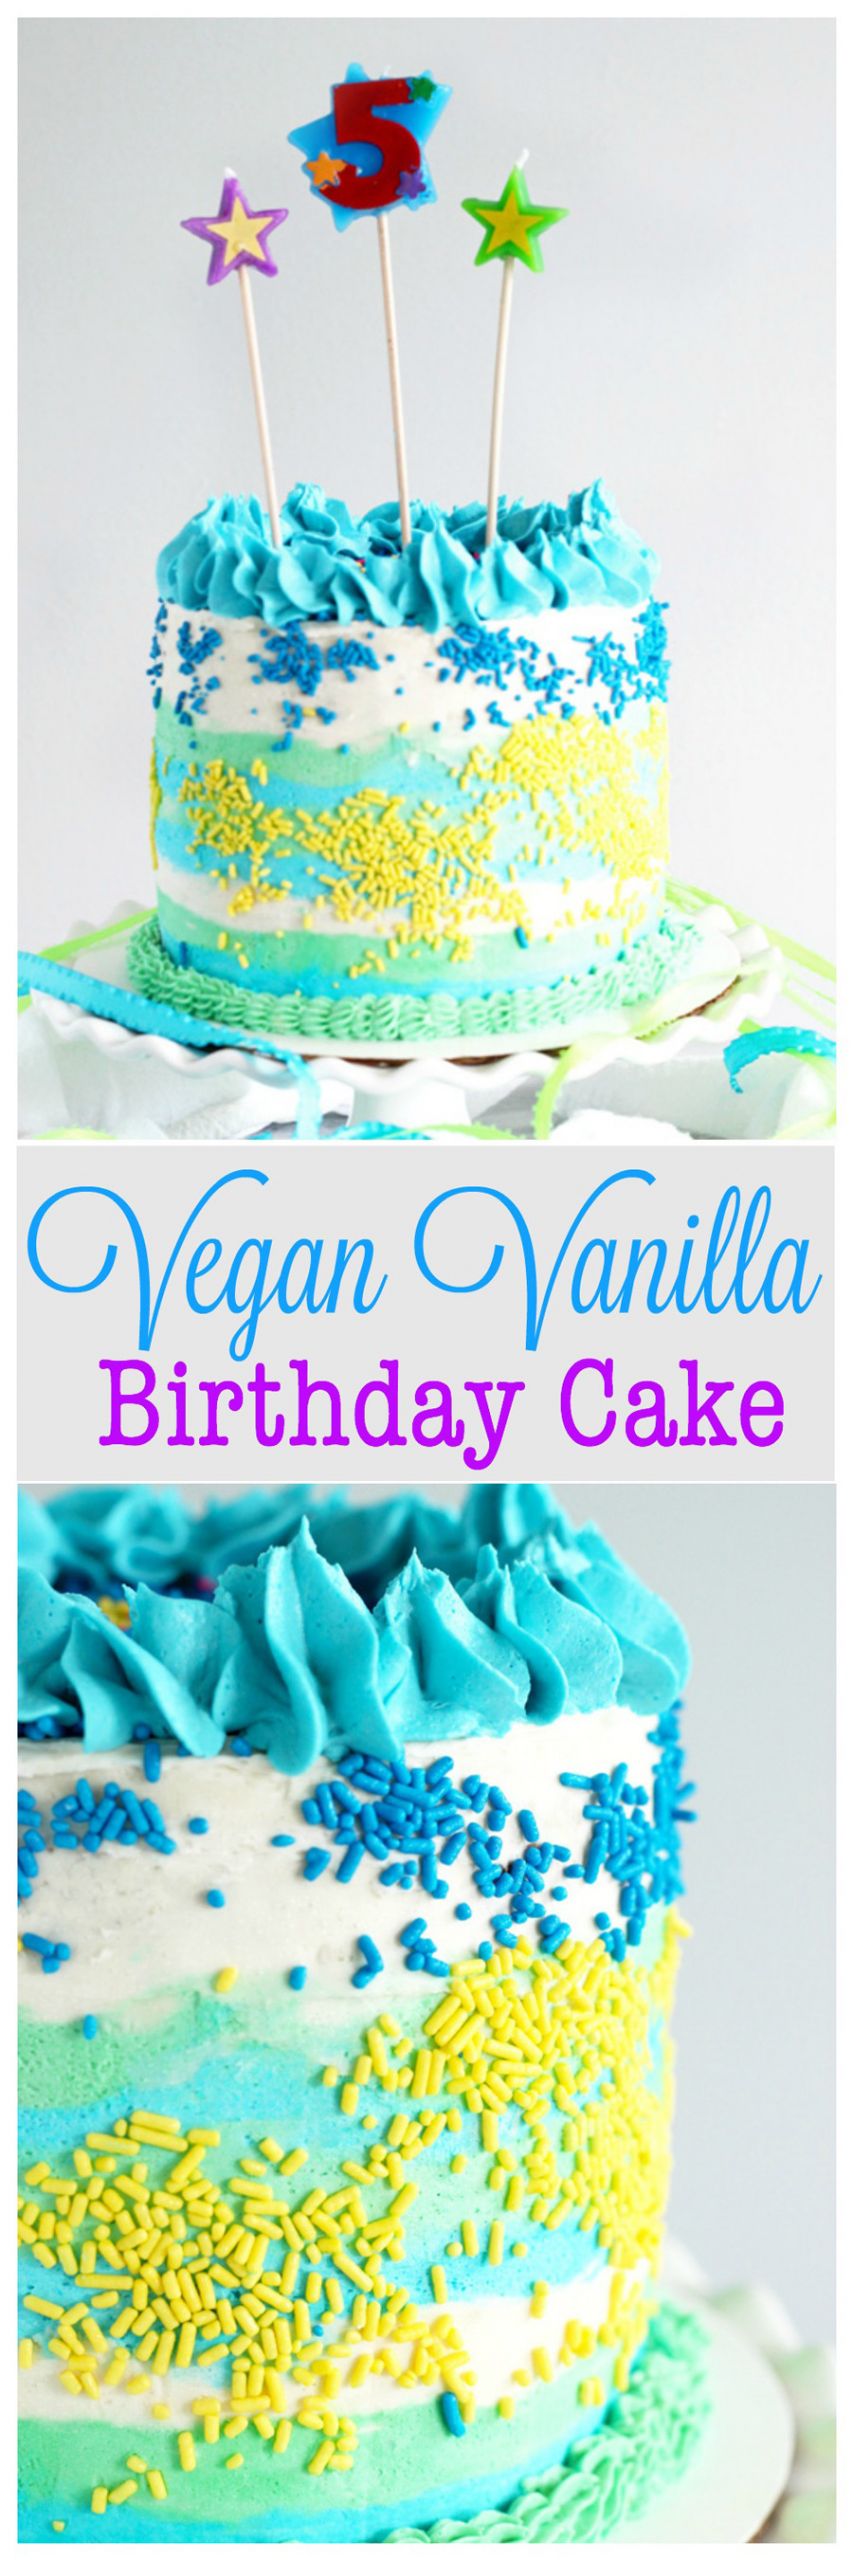 Vegan Birthday Cake Recipe Vanilla
 Vegan Vanilla Birthday Cake NeuroticMommy